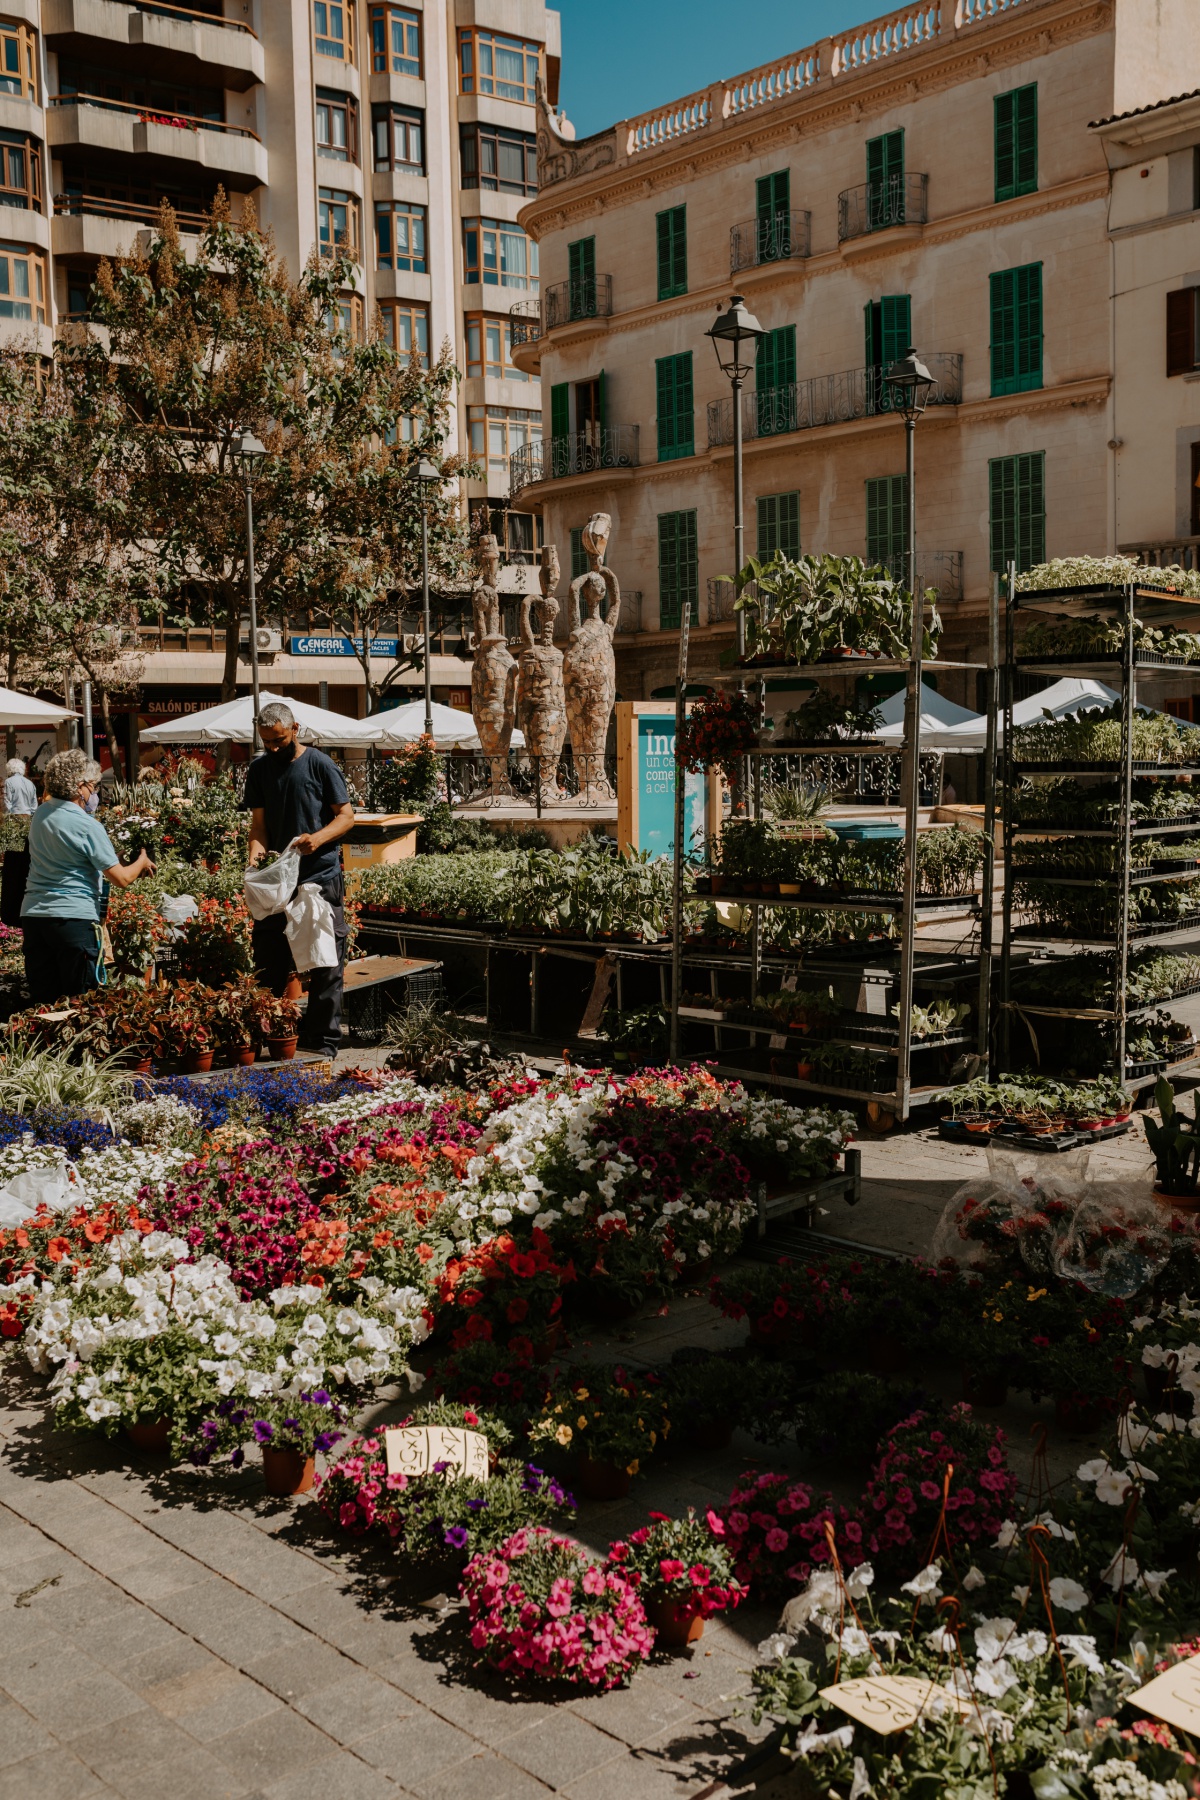 Flower market at the Inca Market in Mallorca Spain.